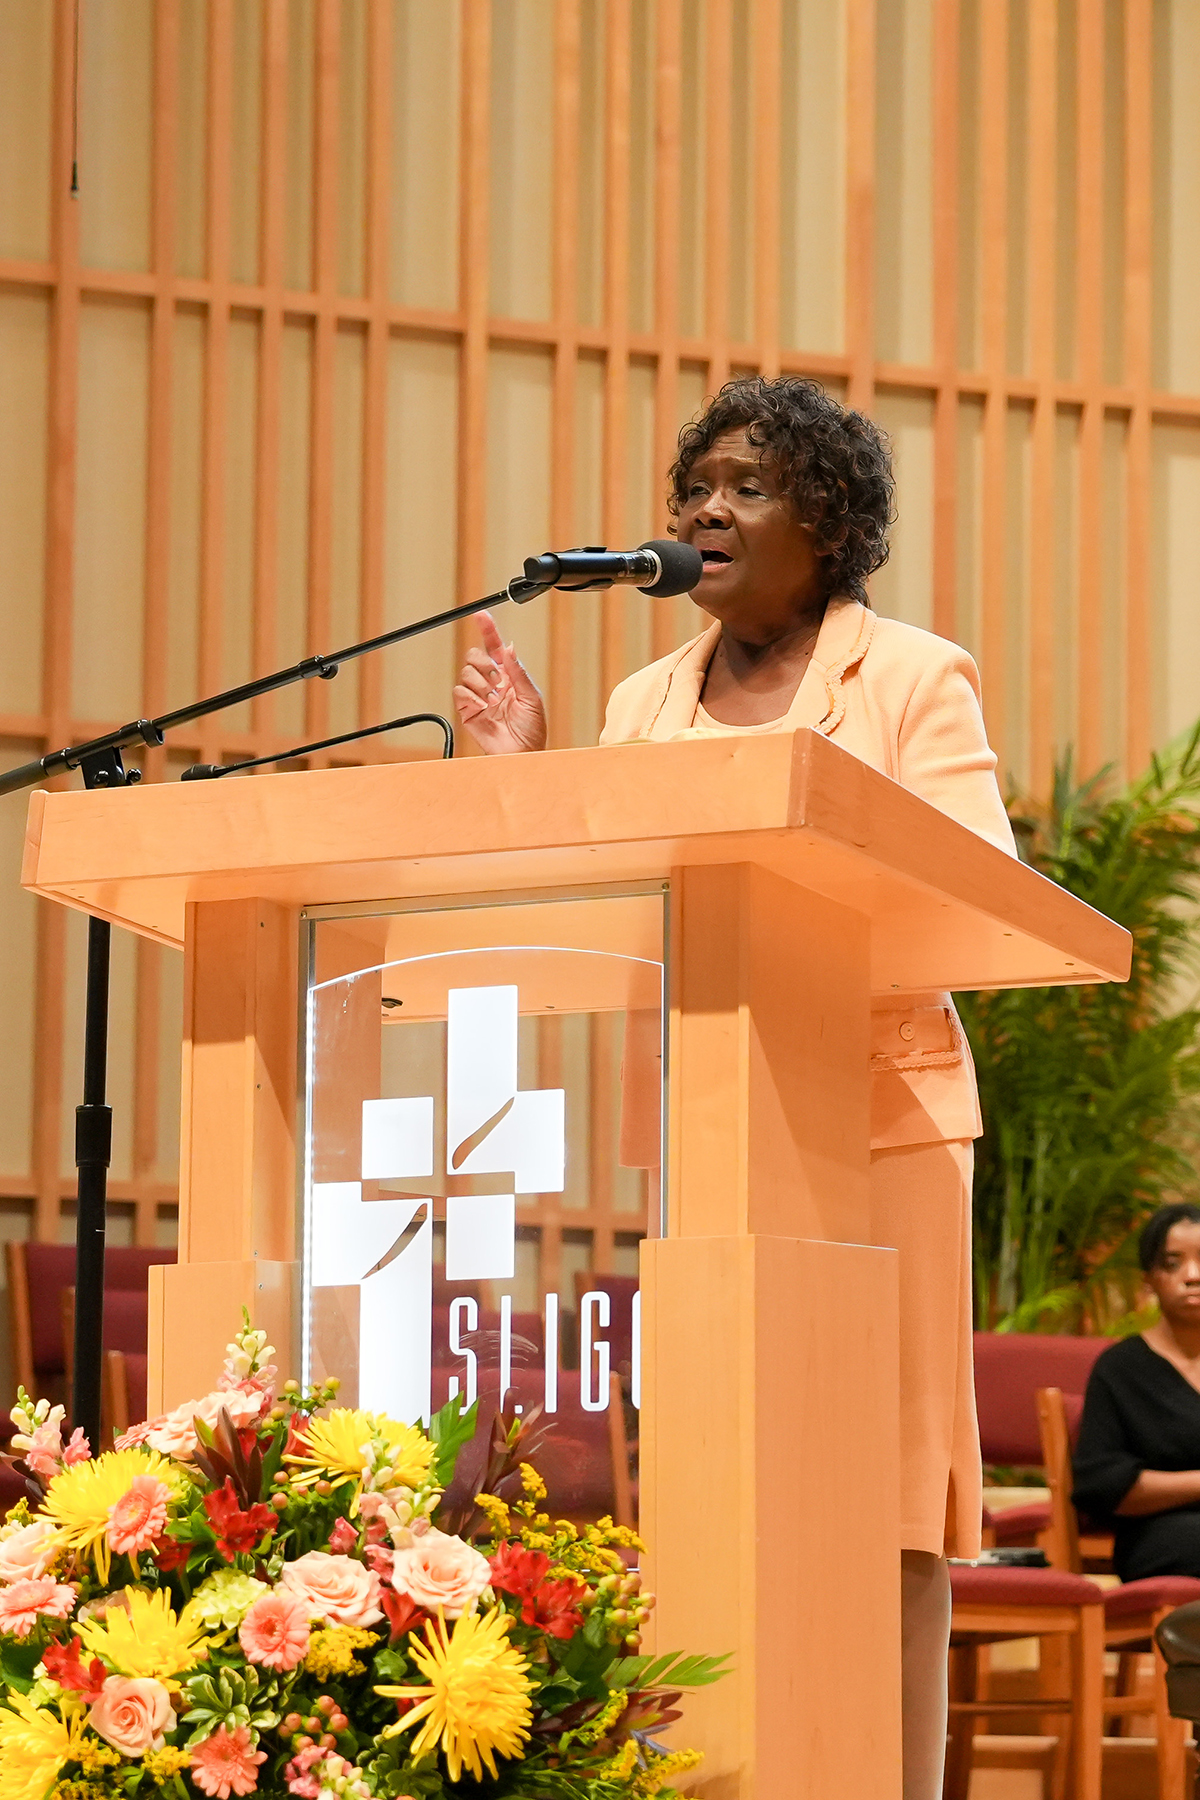 Black woman preaching behind a pulpit in a church. 